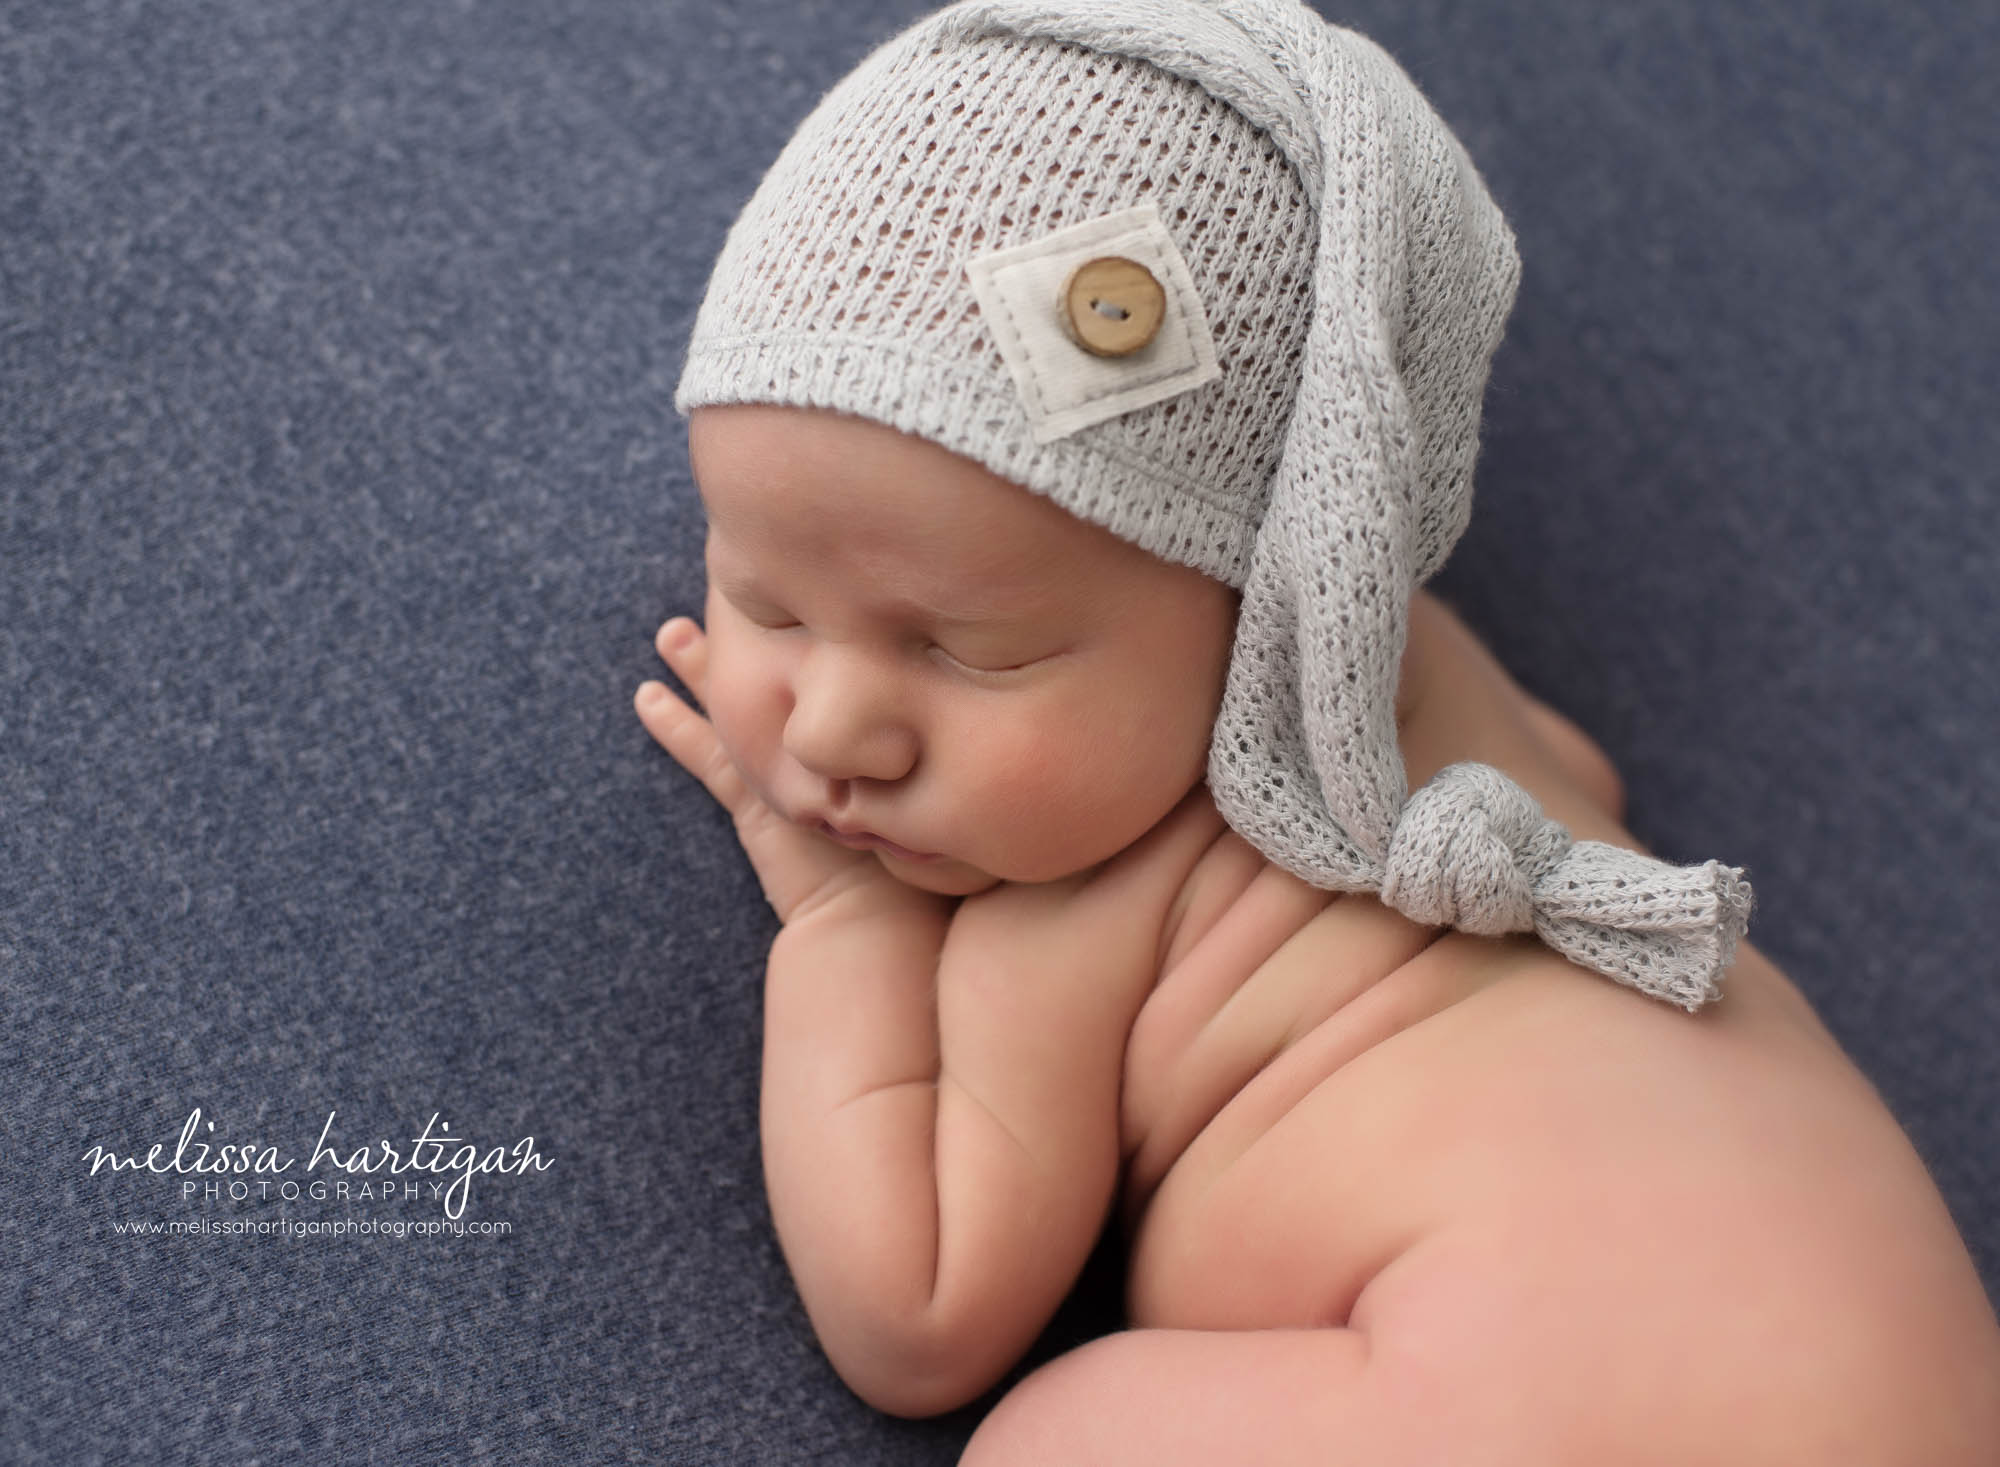 Newborn baby boy posed on side with gray sleepy cap